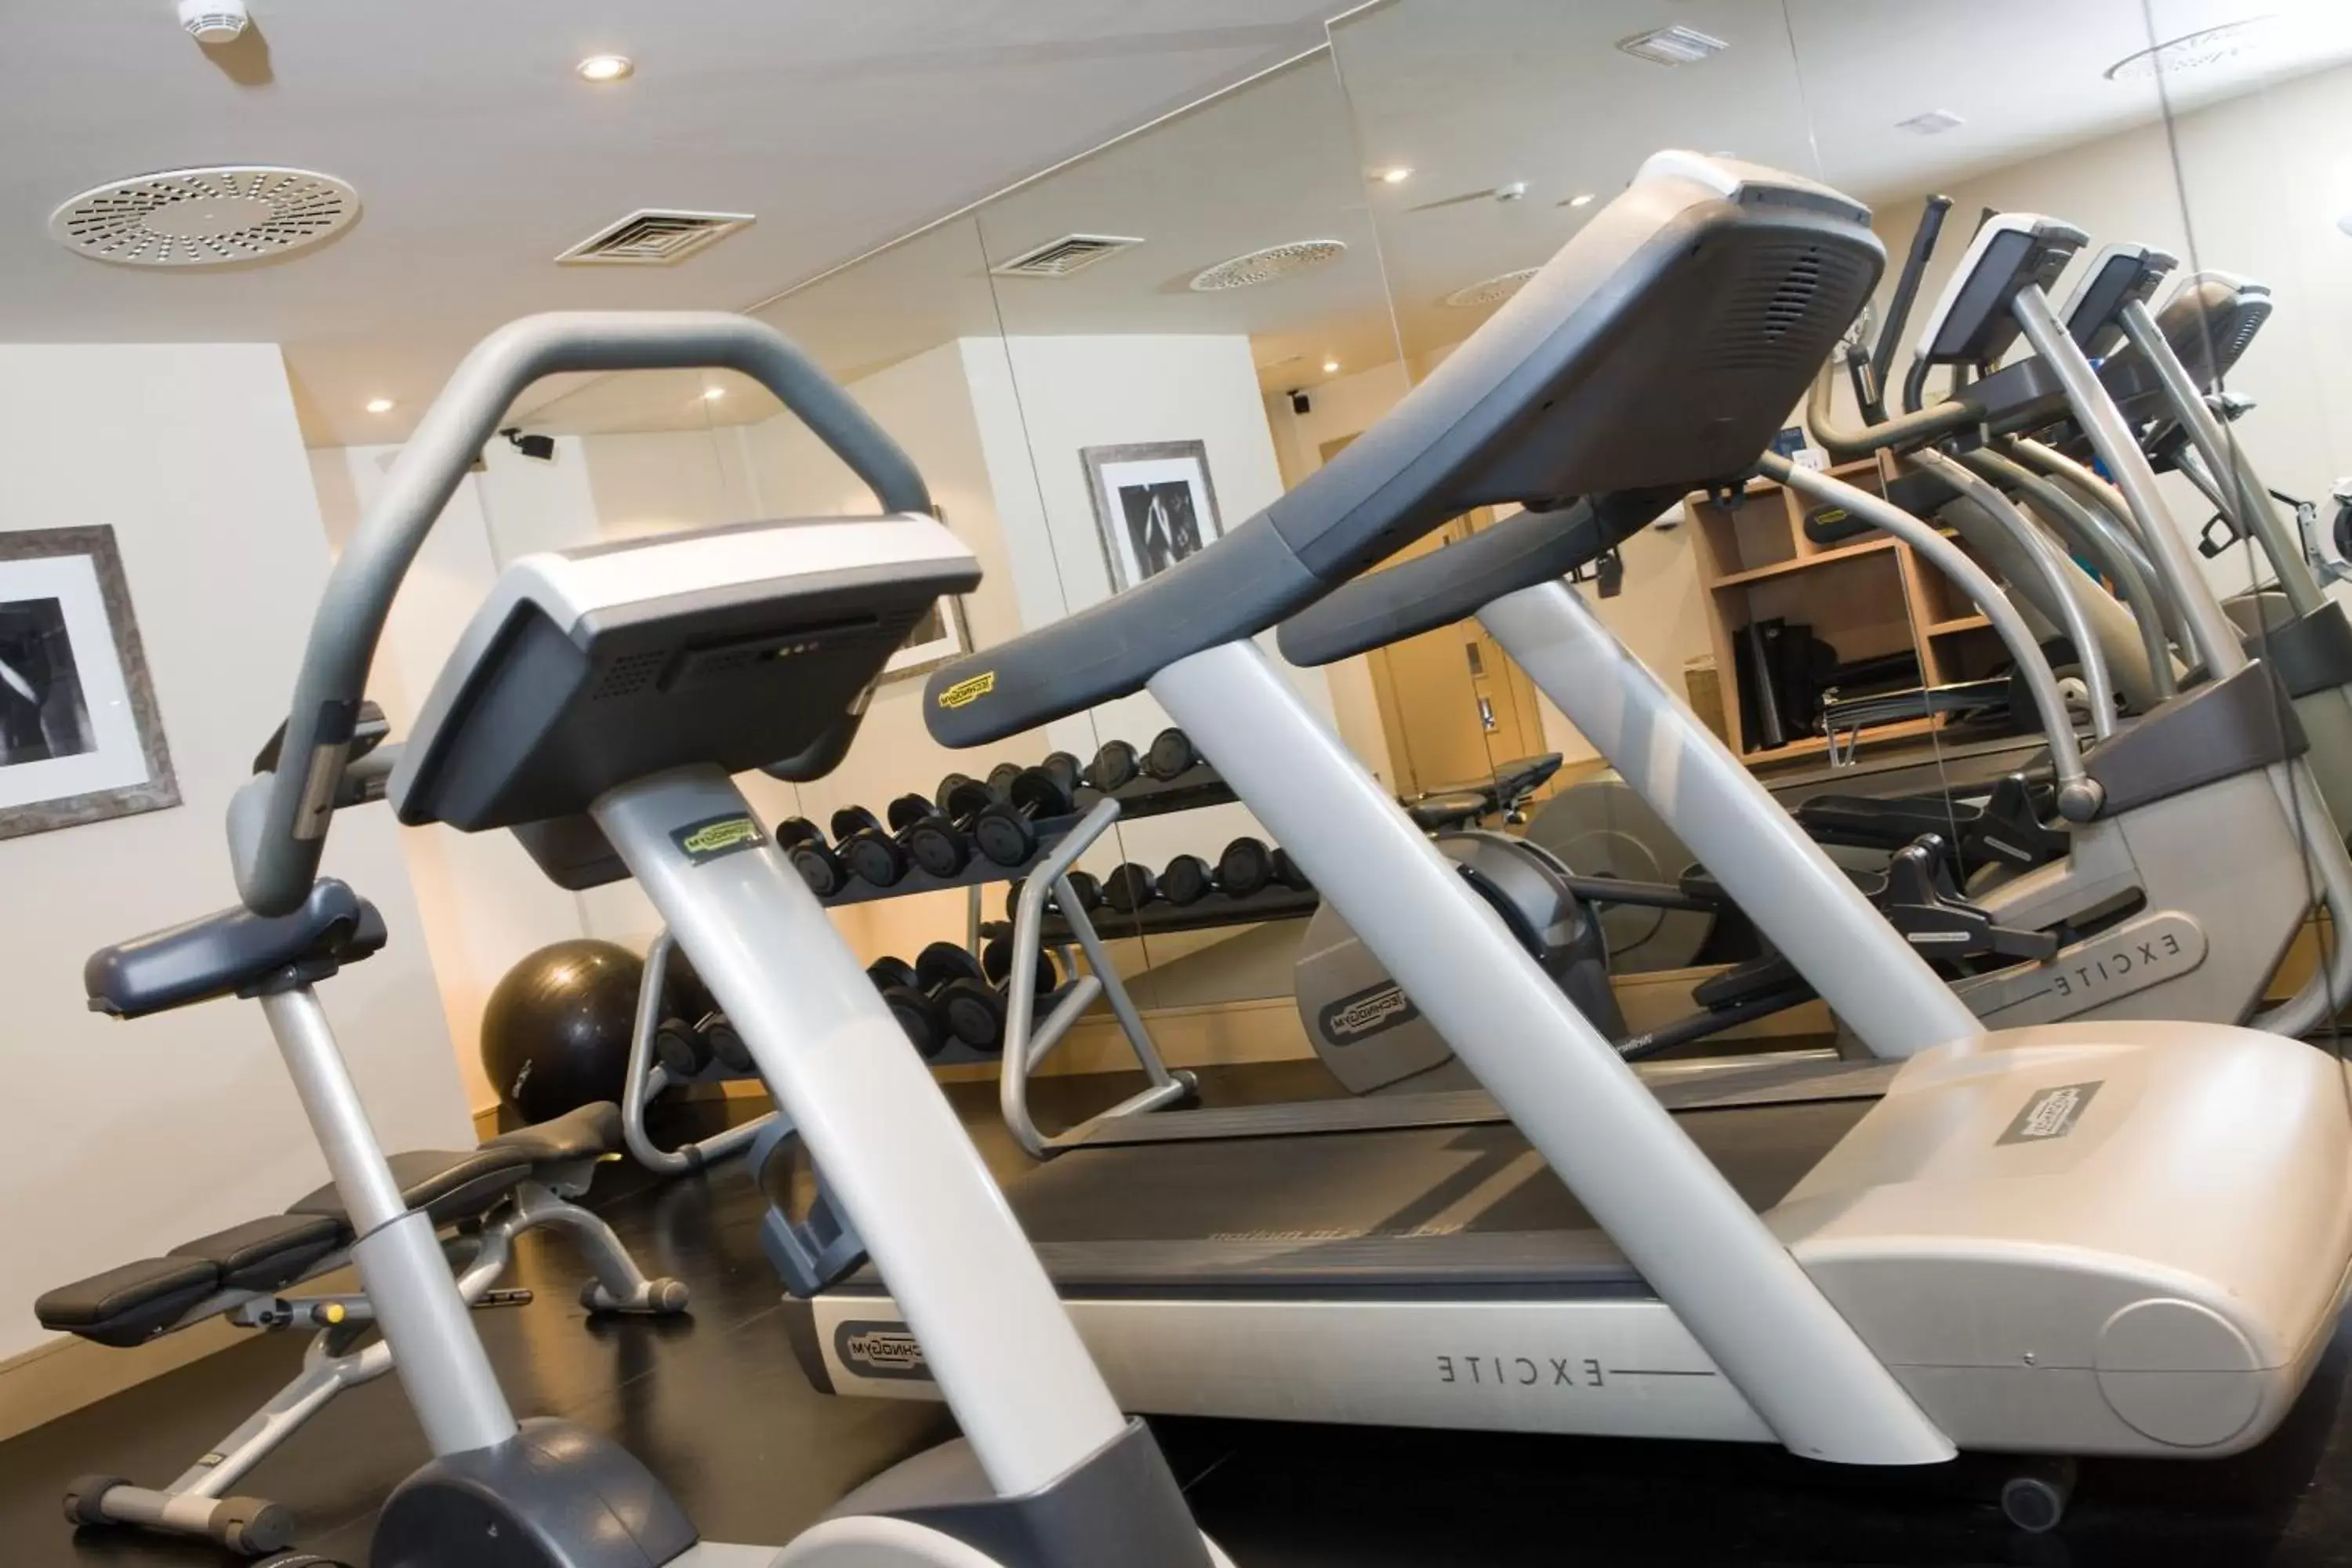 Fitness centre/facilities, Fitness Center/Facilities in Malmaison Aberdeen